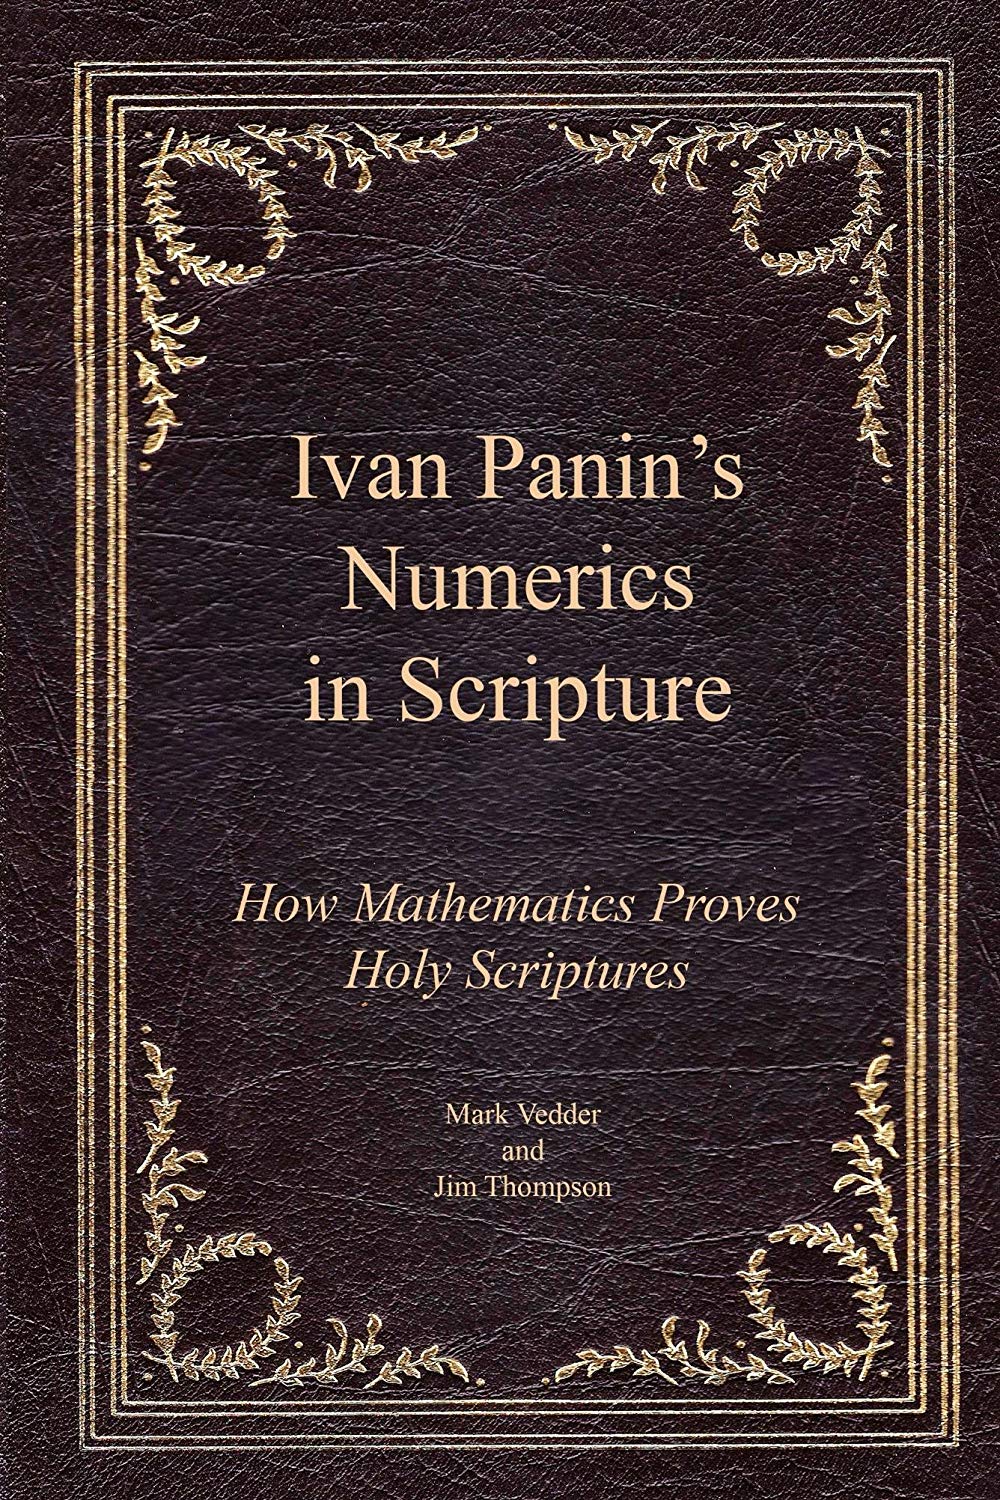 Ivan Panin's numerics in scripture